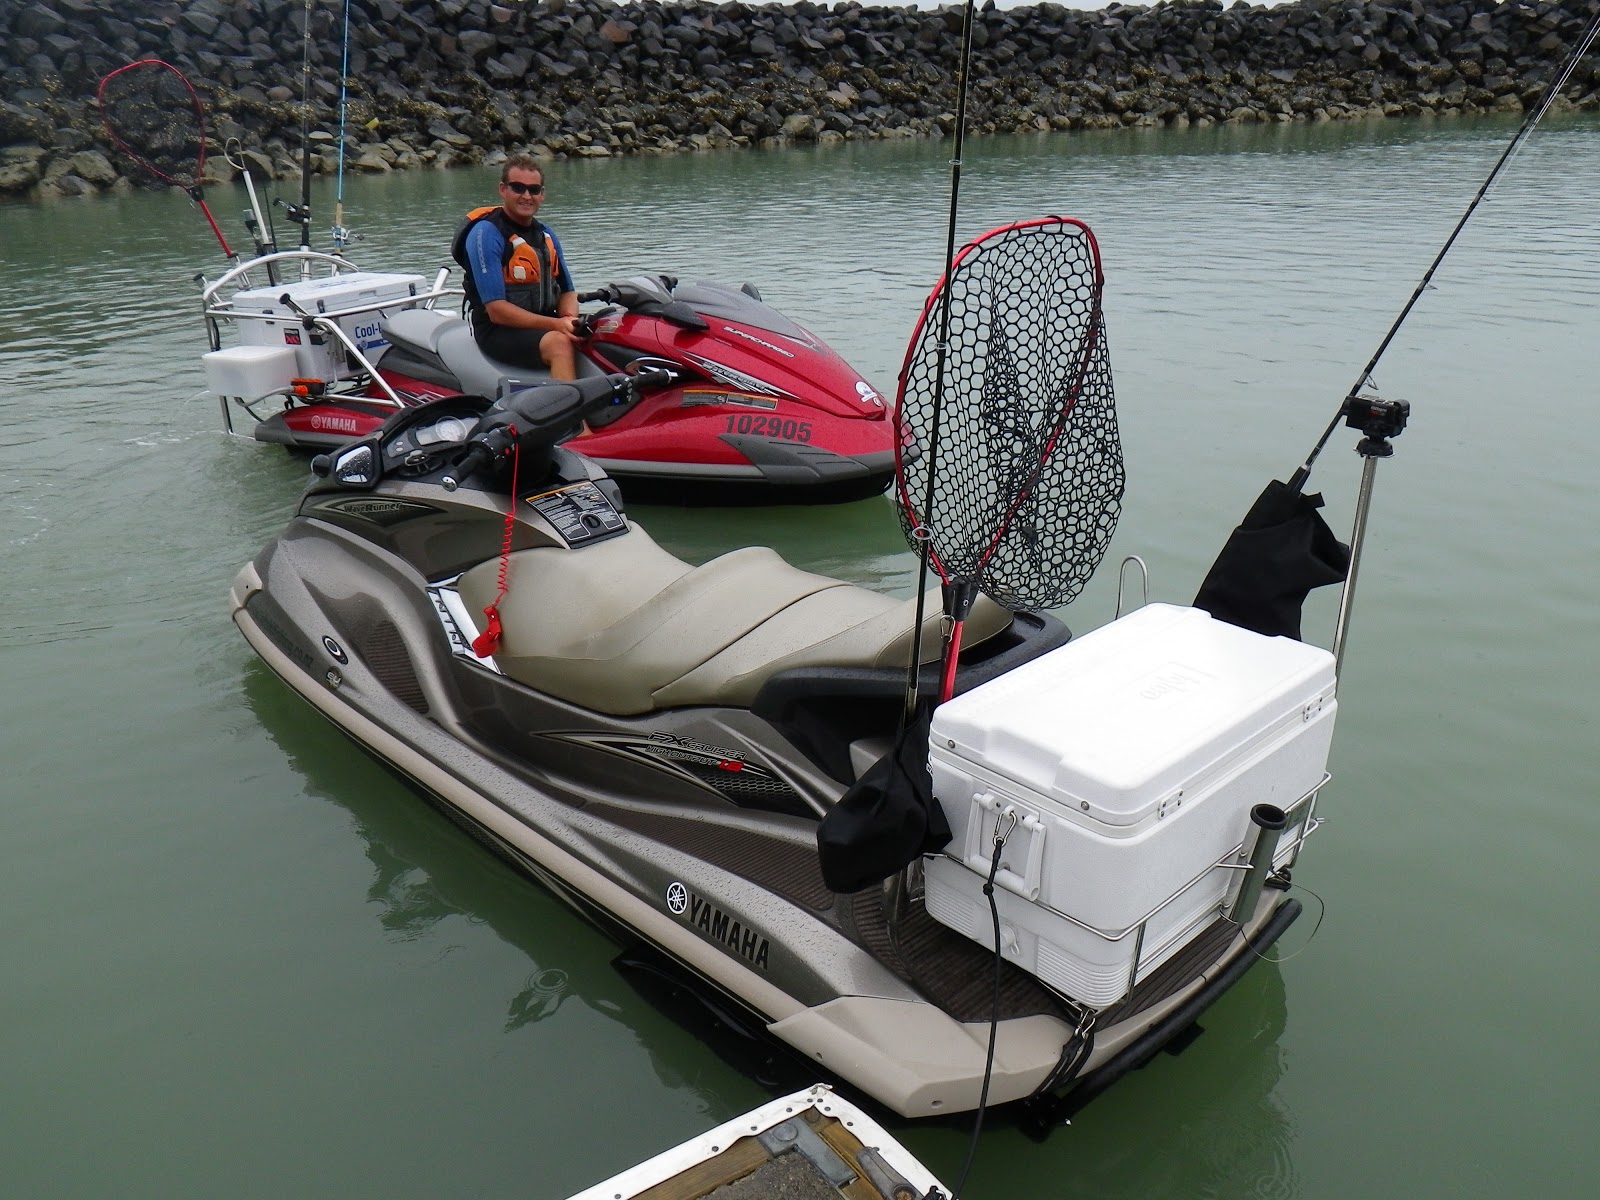 Jet ski fishing Blog: Report 051 Extreme Jetskifishing to catch dinner…  22nd of January 2011